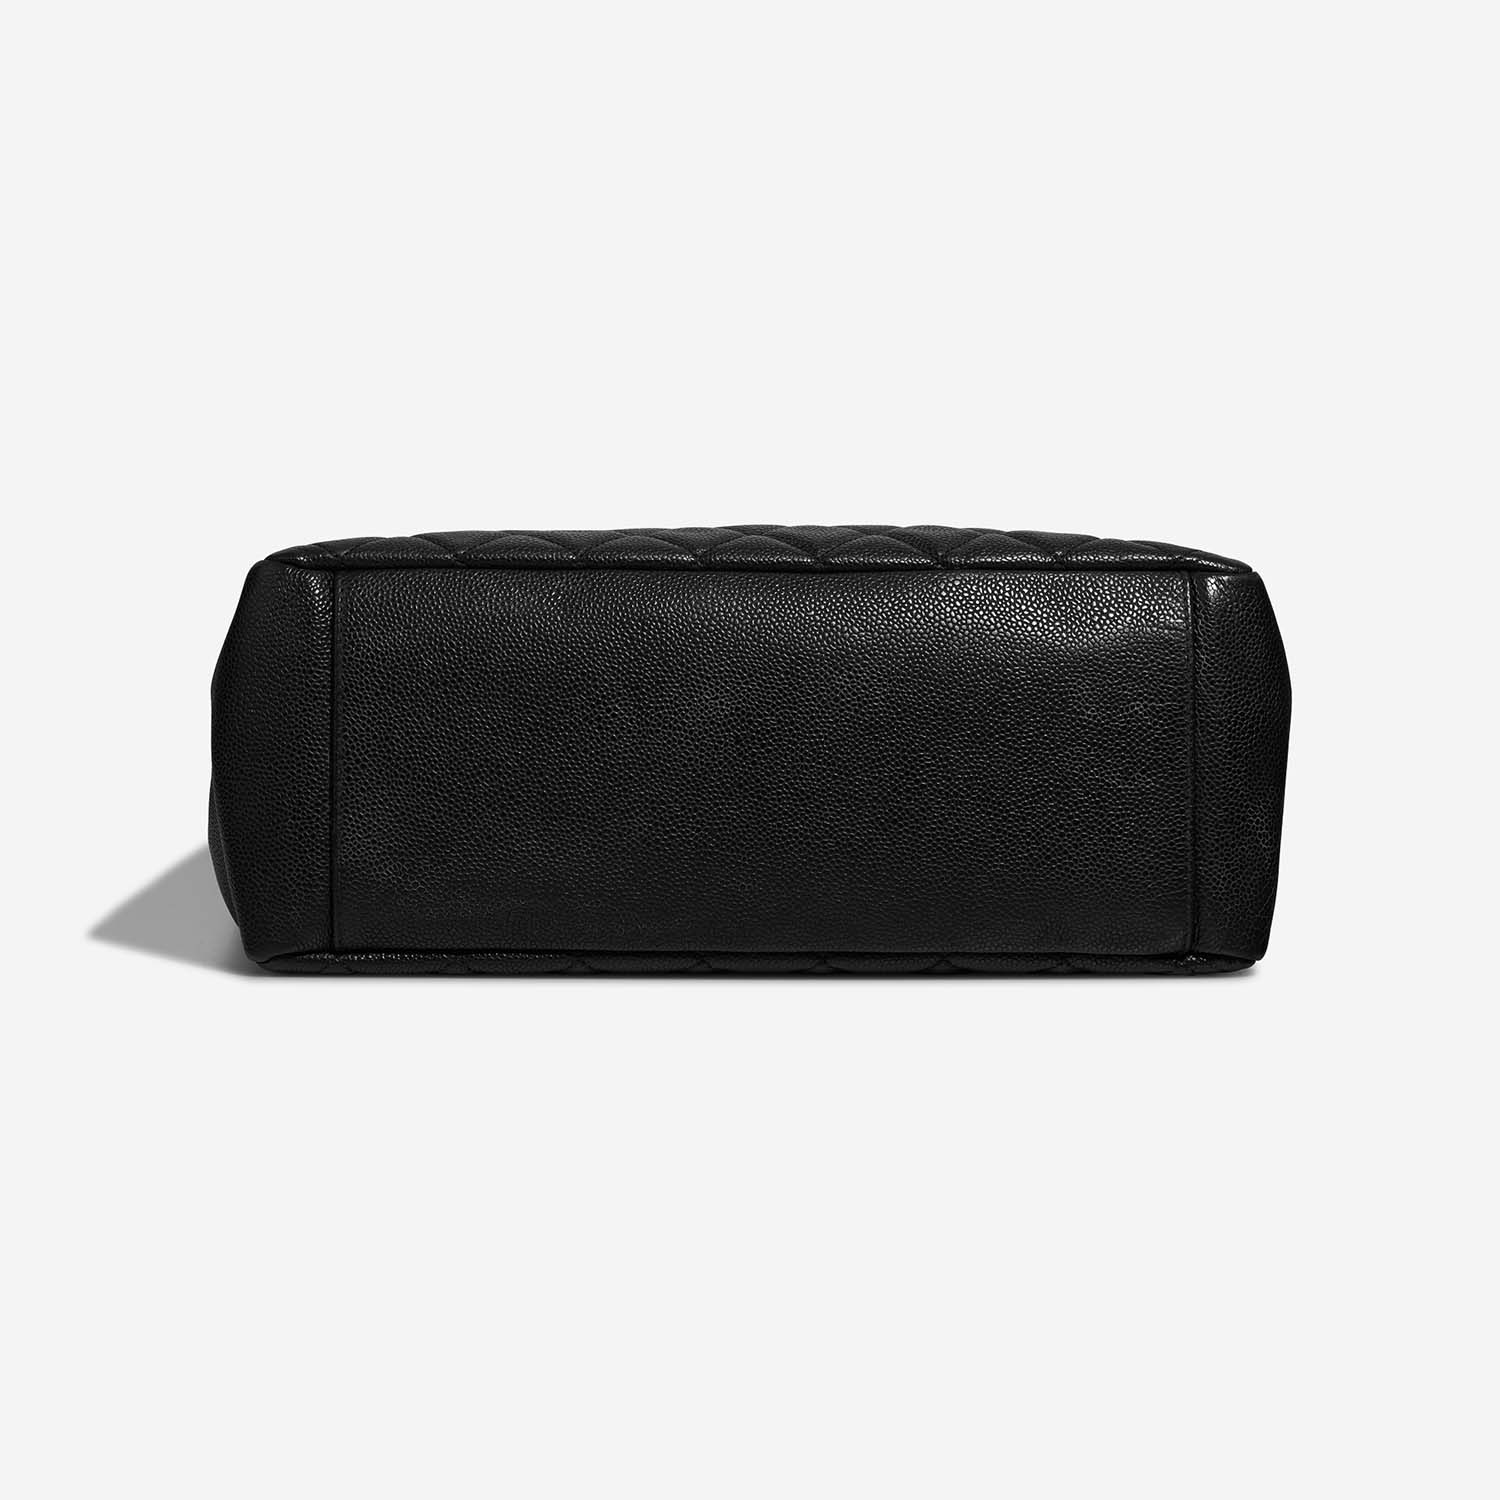 Chanel ShoppingTote Grande Bottom | Sell your designer bag on Saclab.com